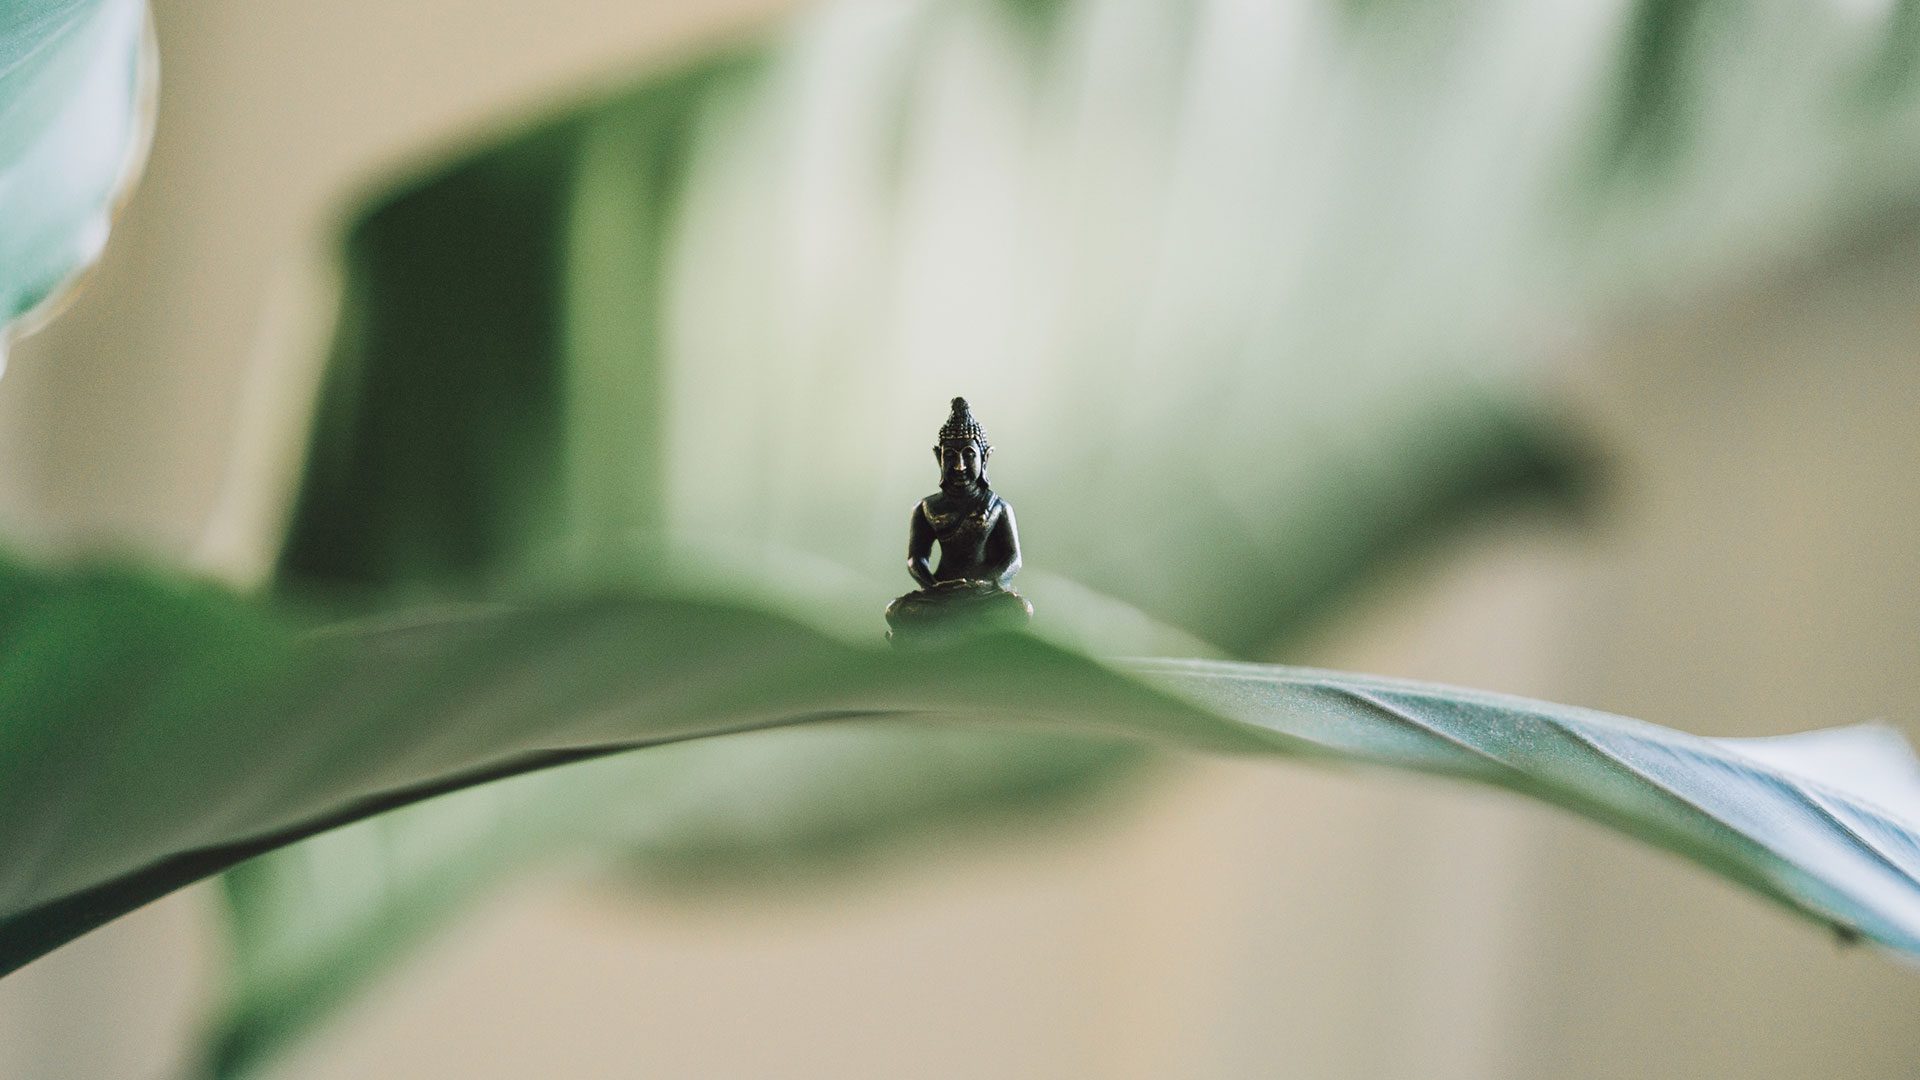 Little Buddha statue meditating on a leaf